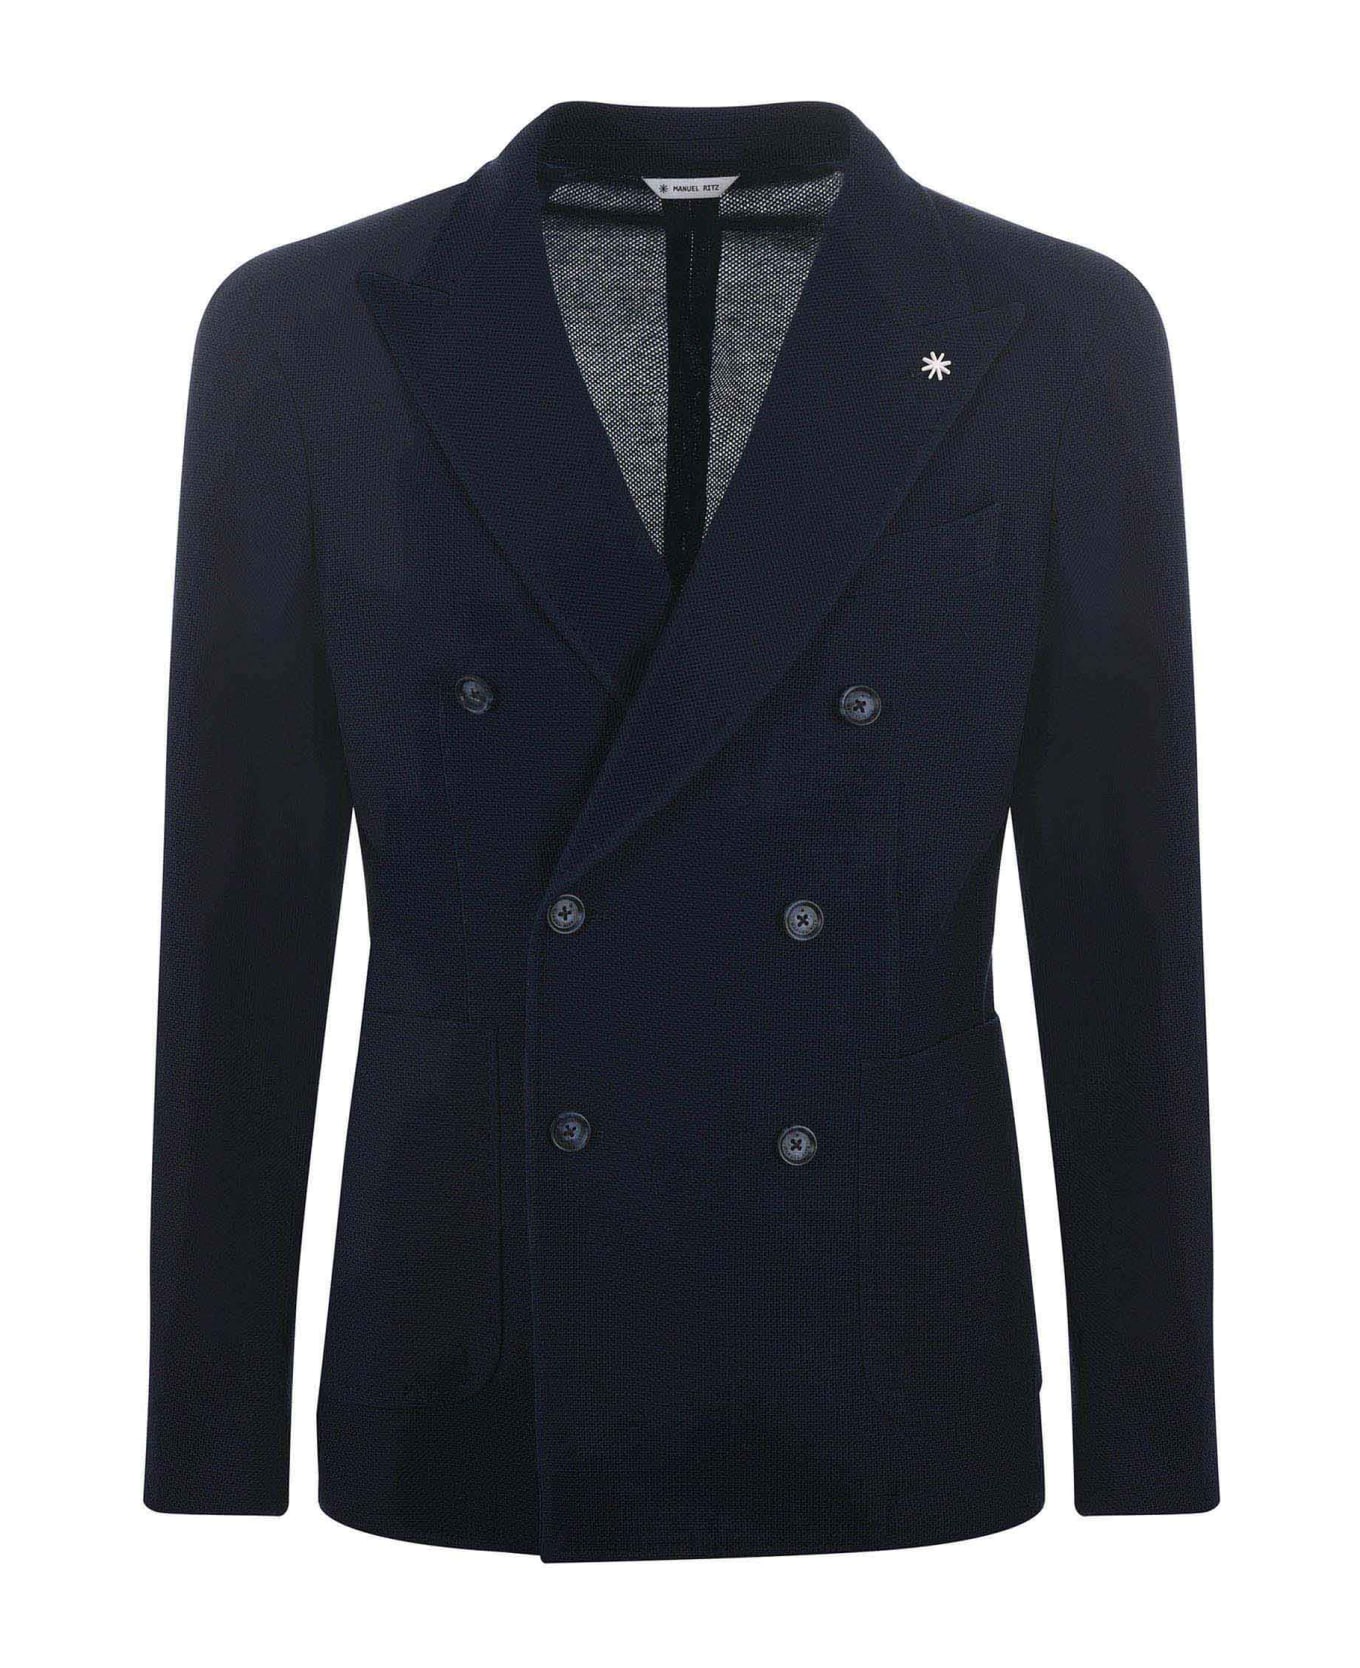 Manuel Ritz Jacket - Blu scuro